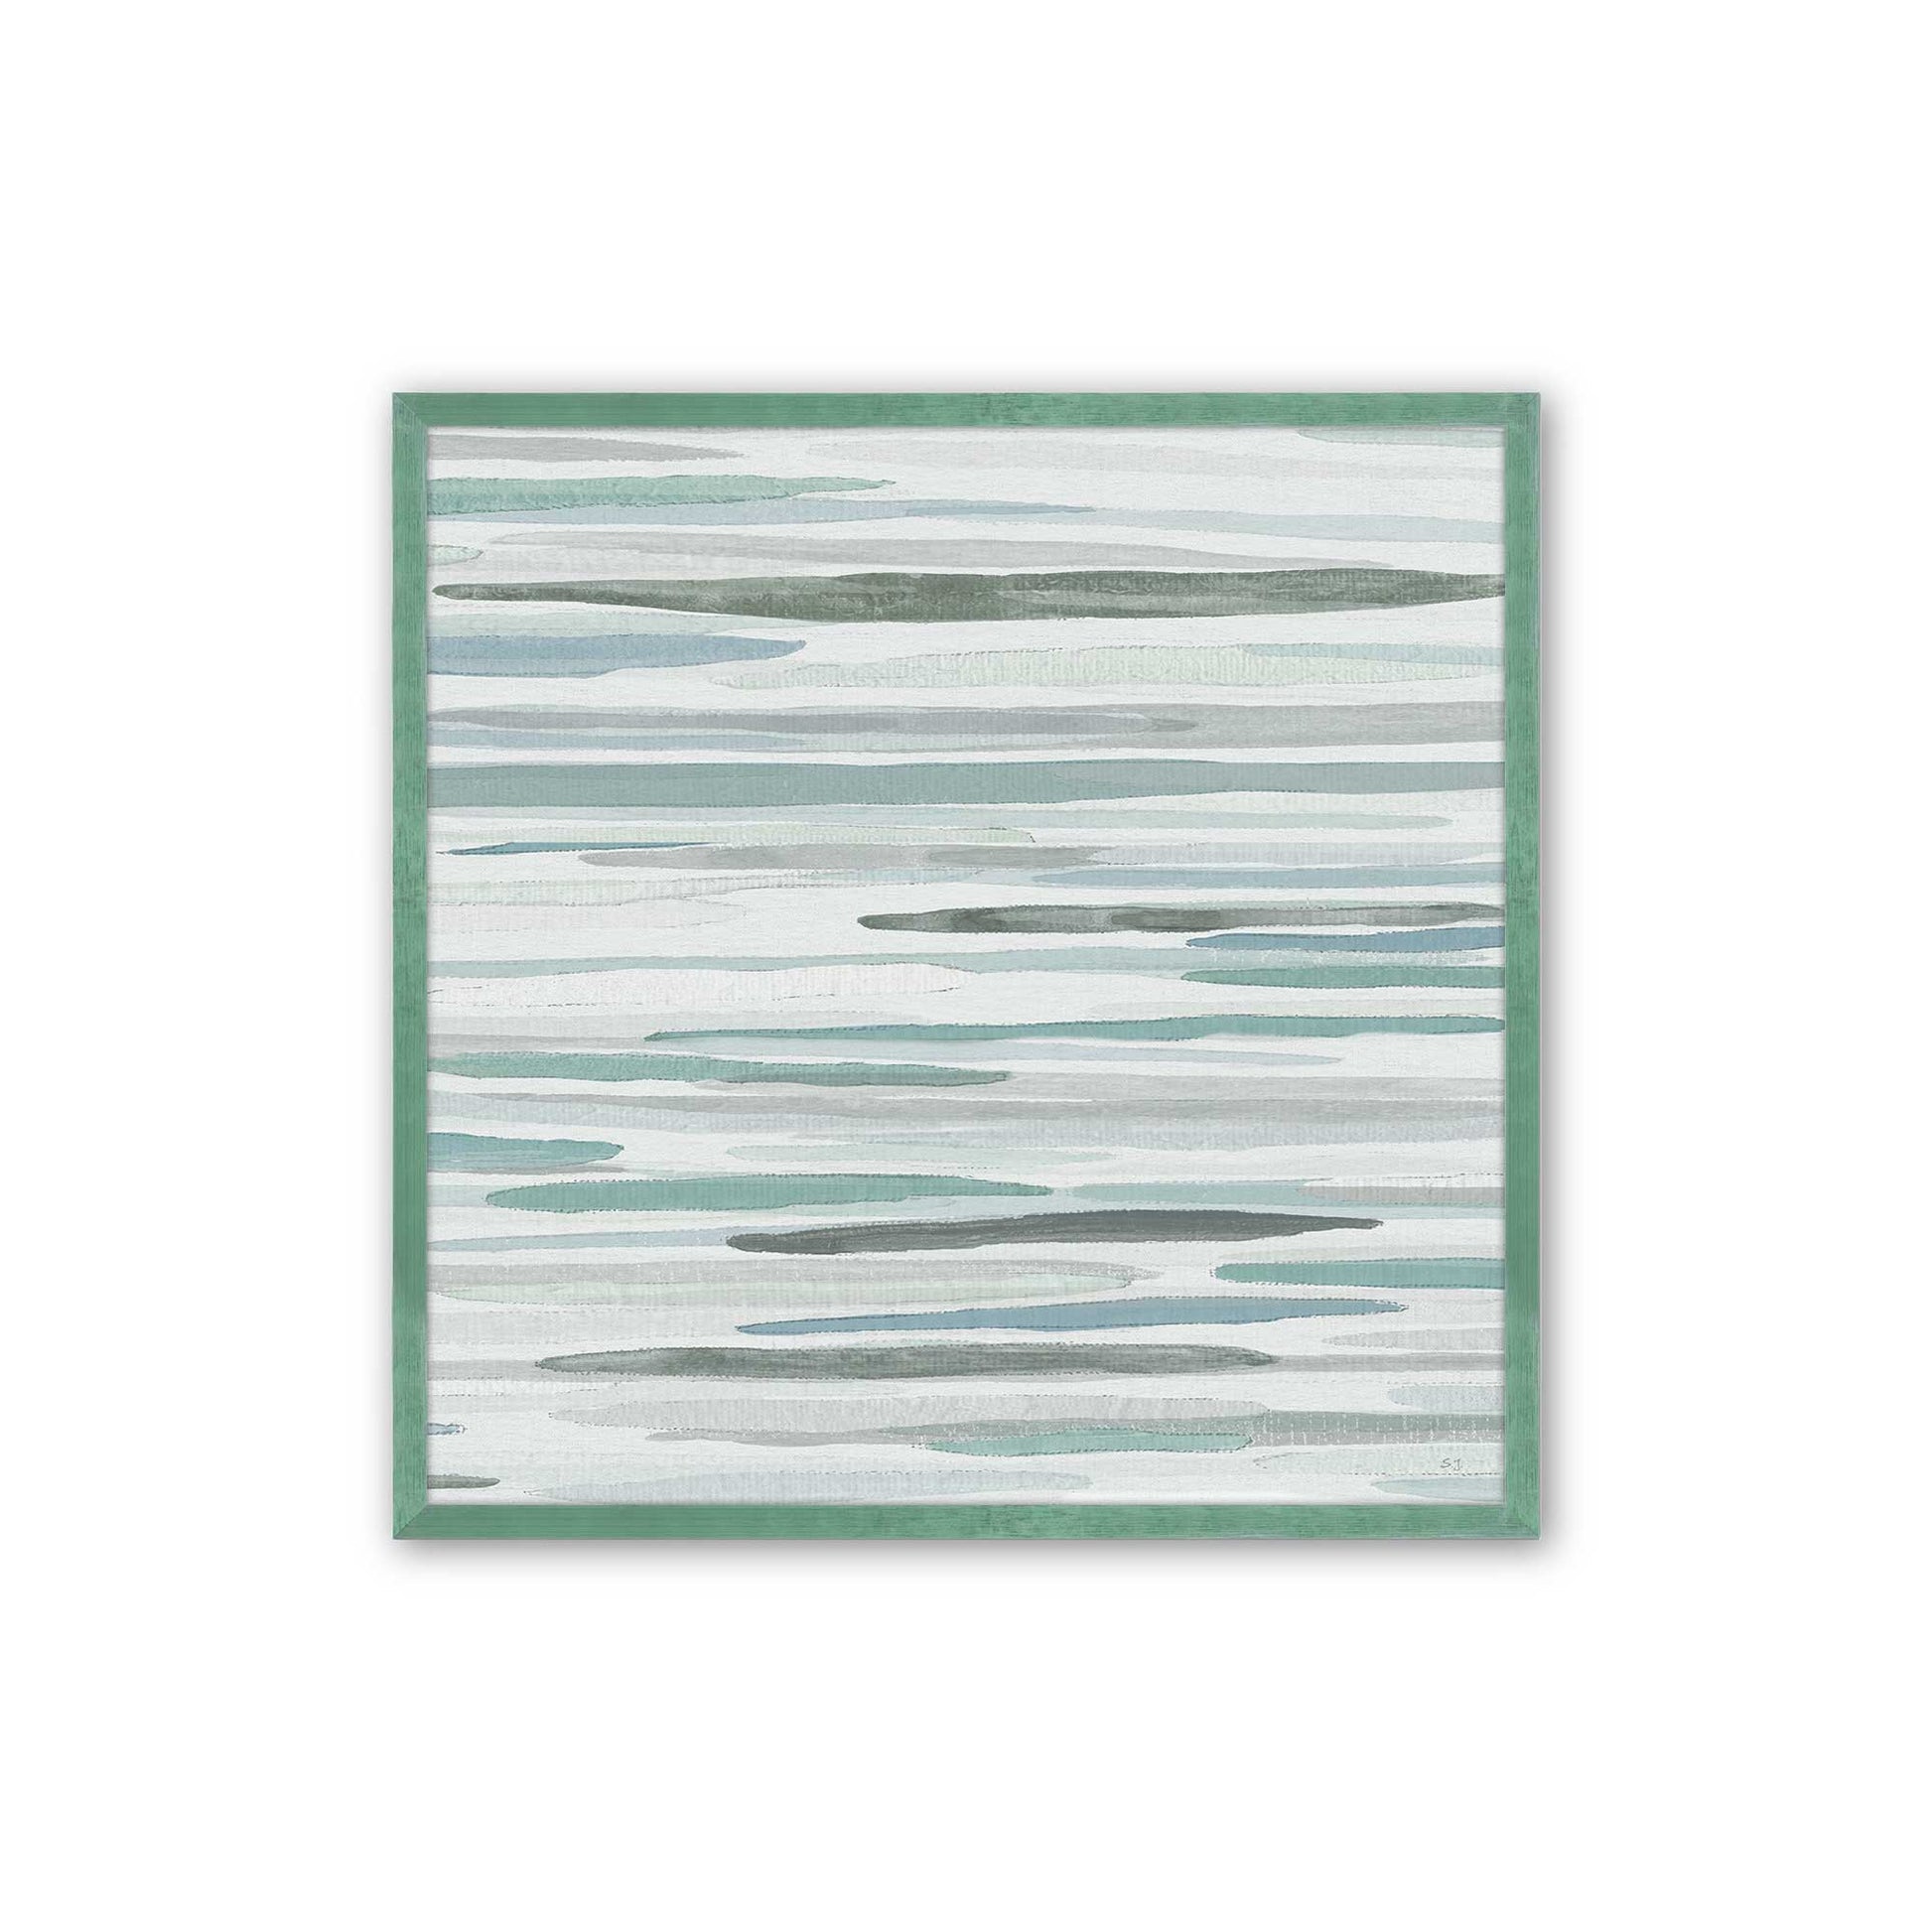 [Color:Lemon Grass], Picture of art in a Lemon Grass frame